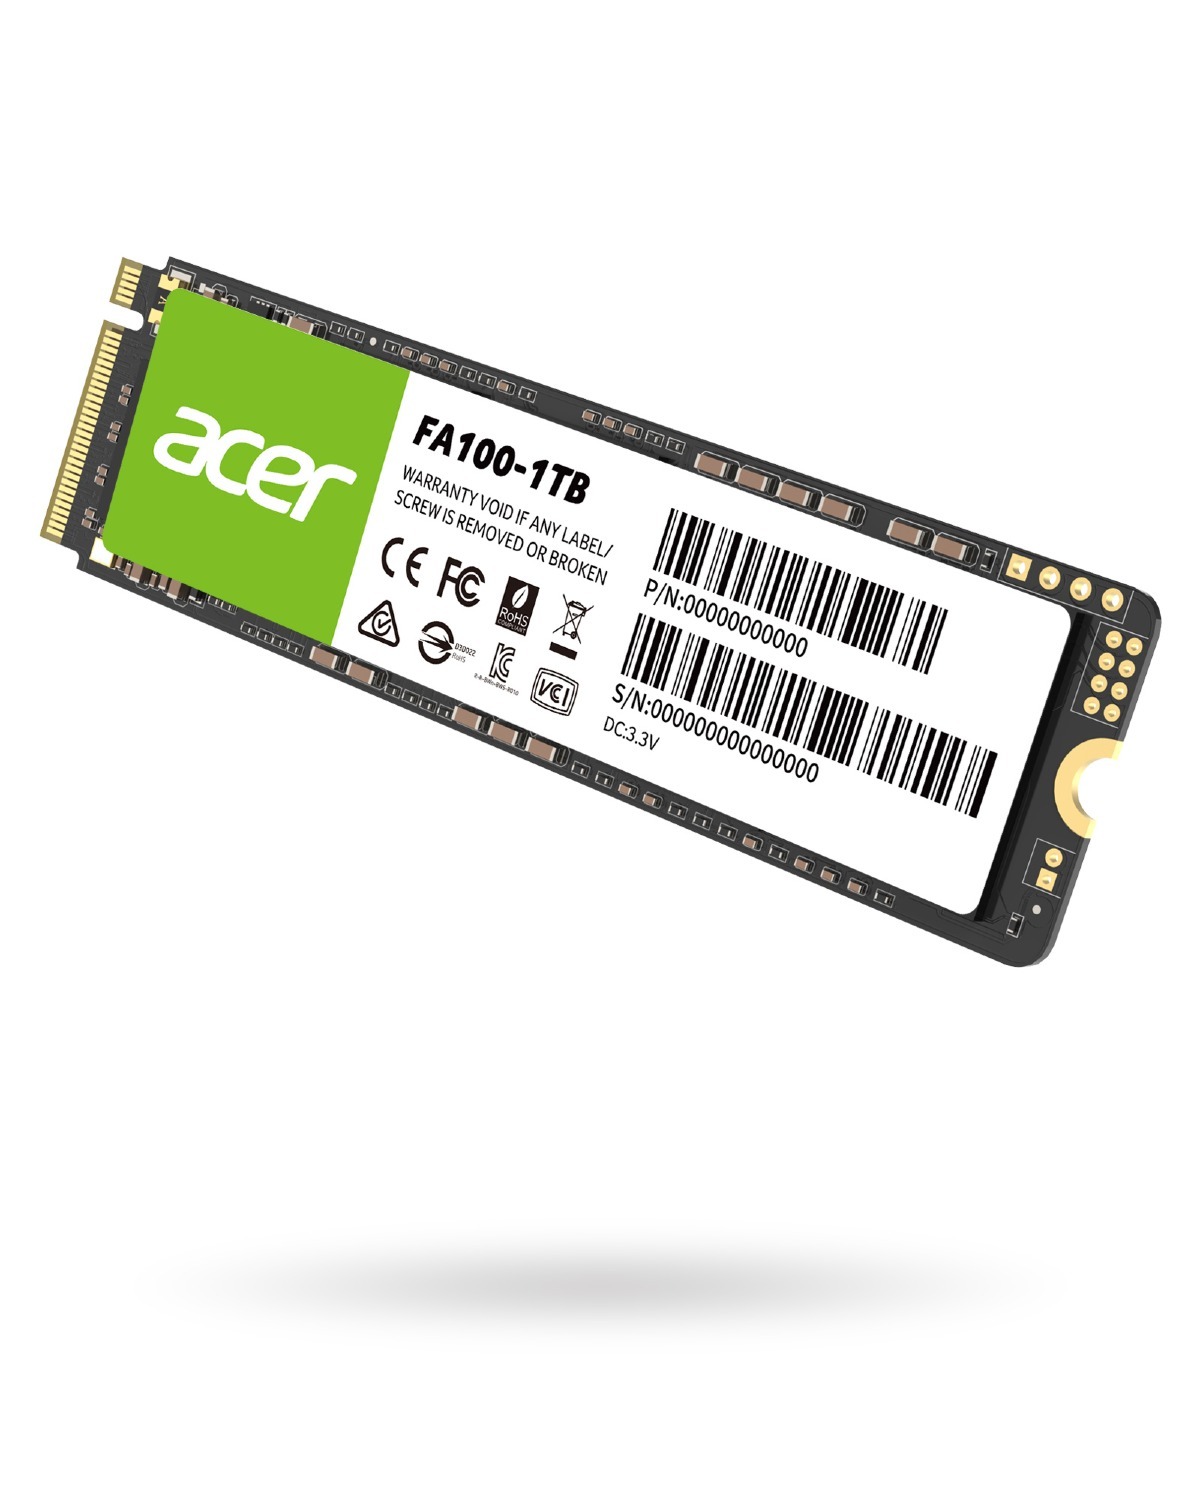 Acer FA100 M.2 2280 PCIe Gen3 x 4 NVMe, 8 Gb/s, 3D NAND Internal SSD: 1TB $39, 512GB $25 + Free Shipping w/ Prime